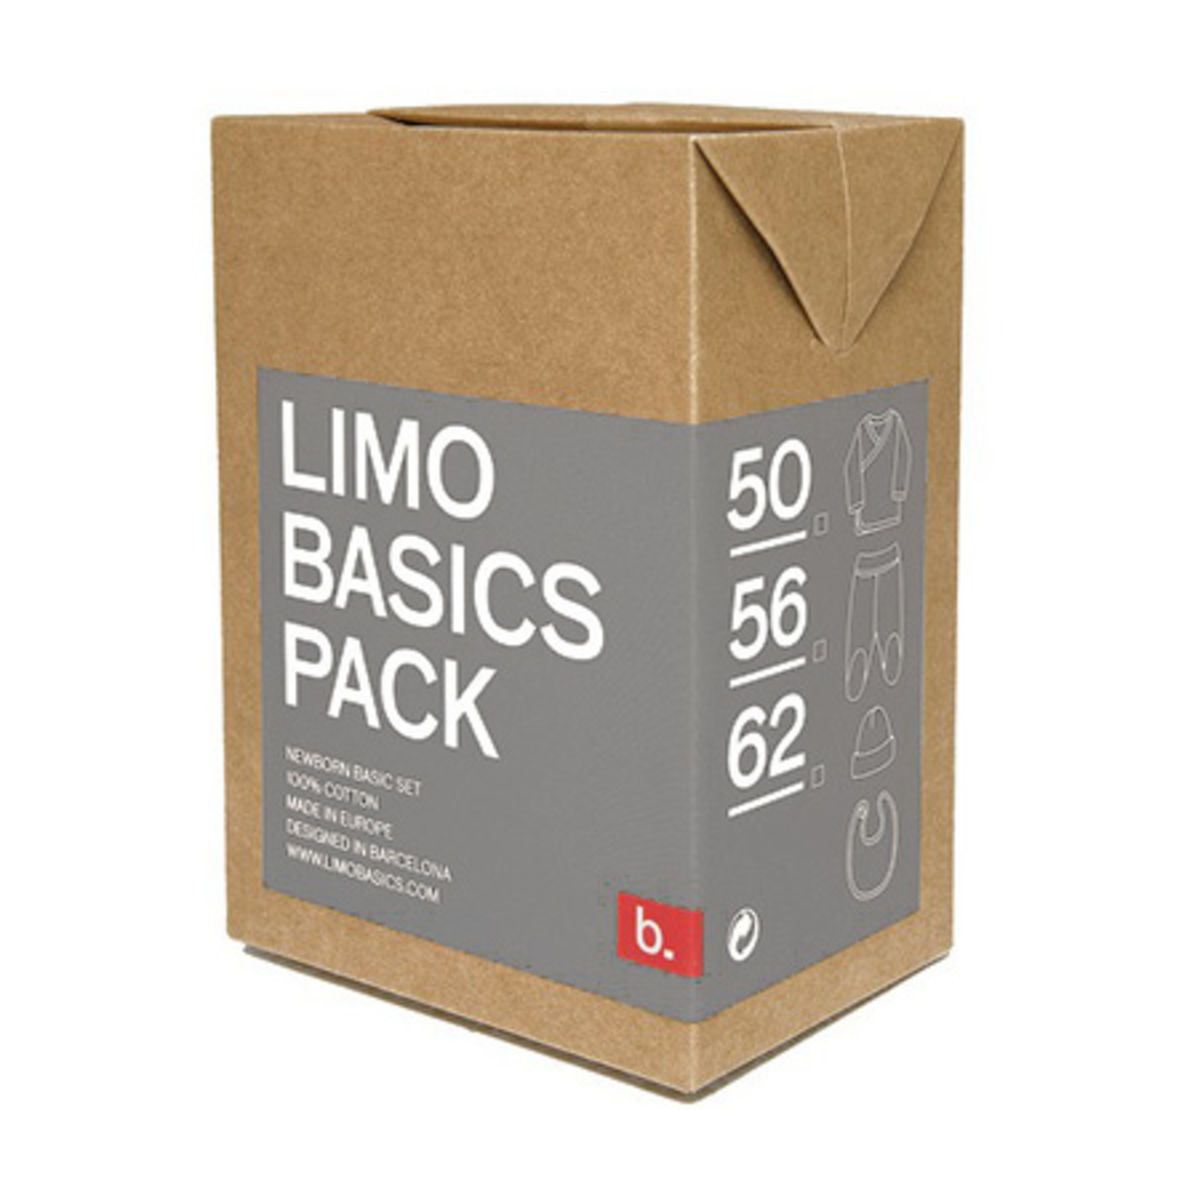 limobasics pack grey